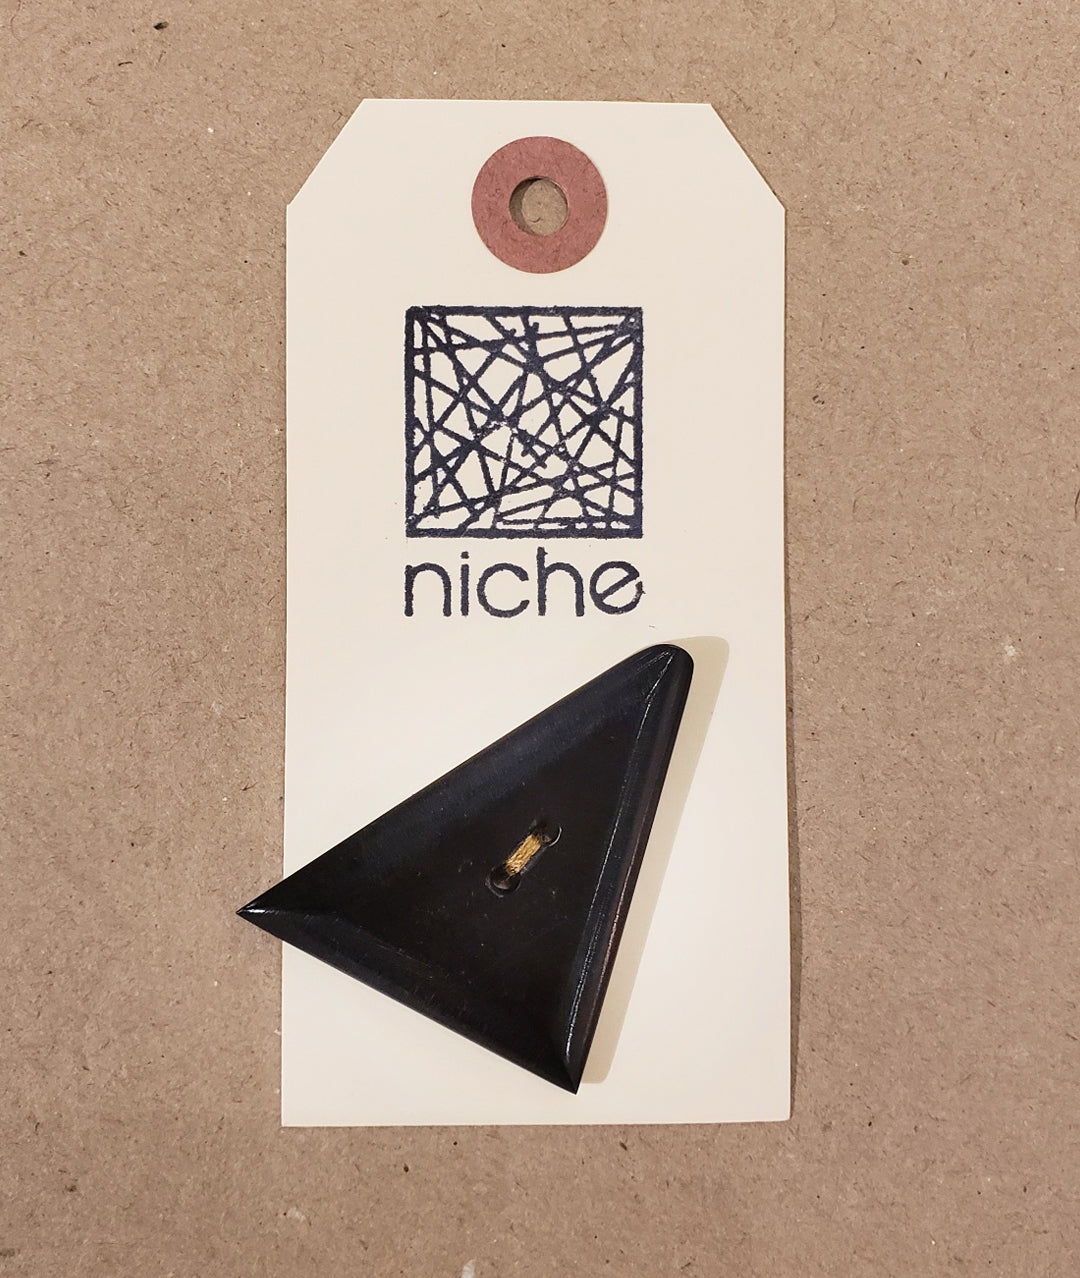 triangular black button on a Niche card